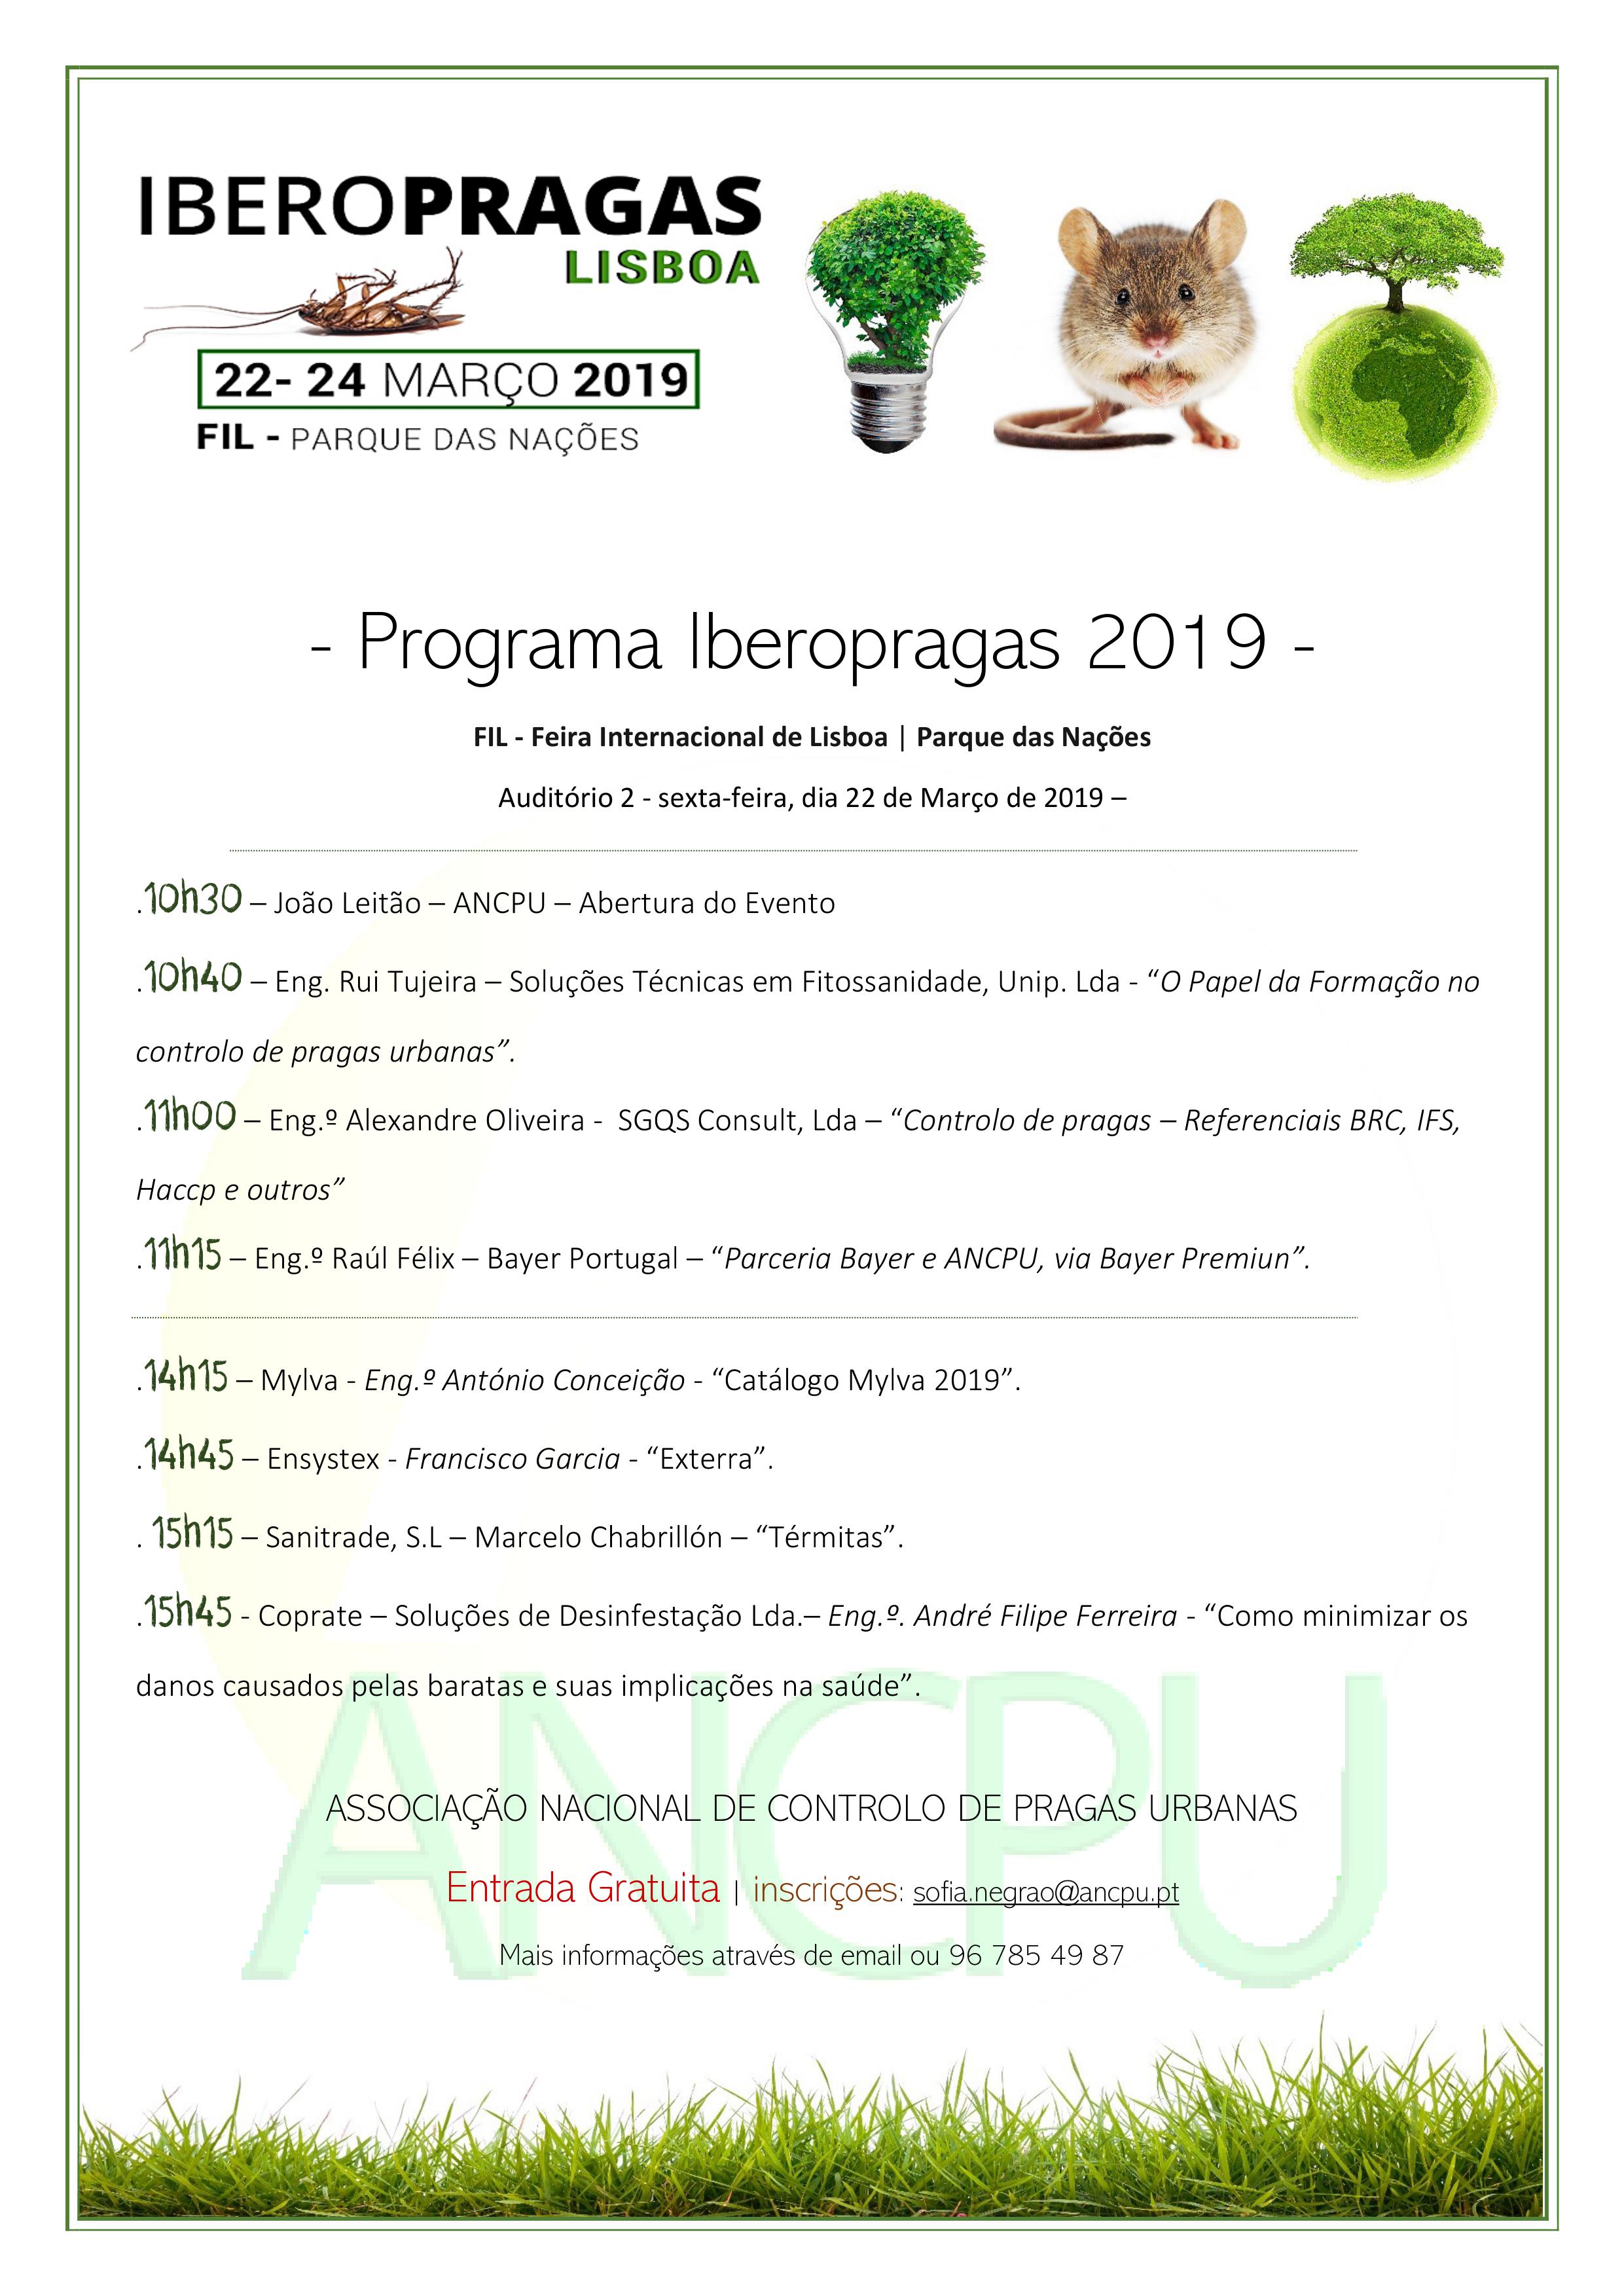 Programa Iberopragas 2019 - imagem corrigida